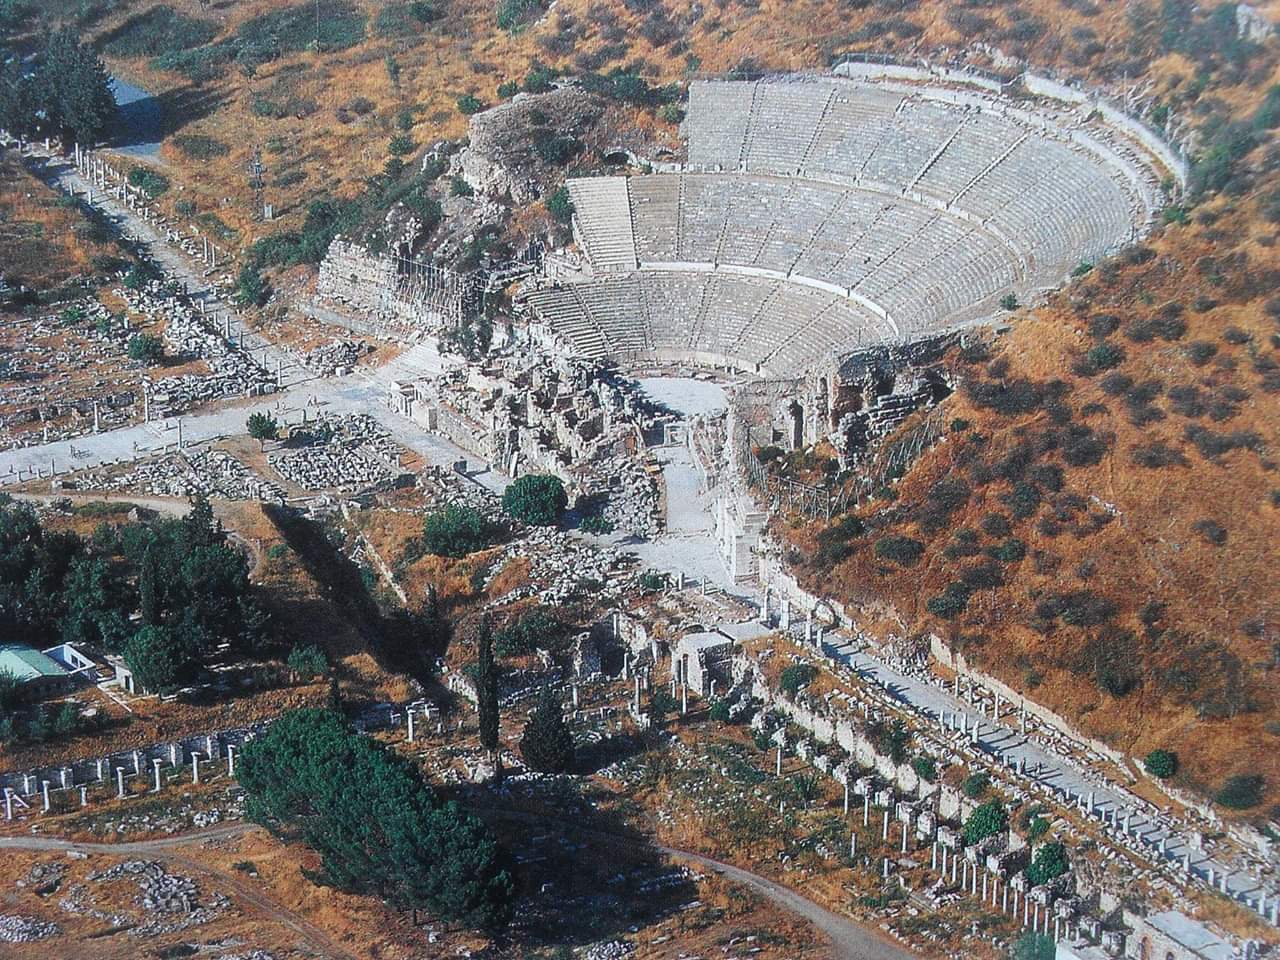 Birds eye view of the Amphitheatre at Ephesus